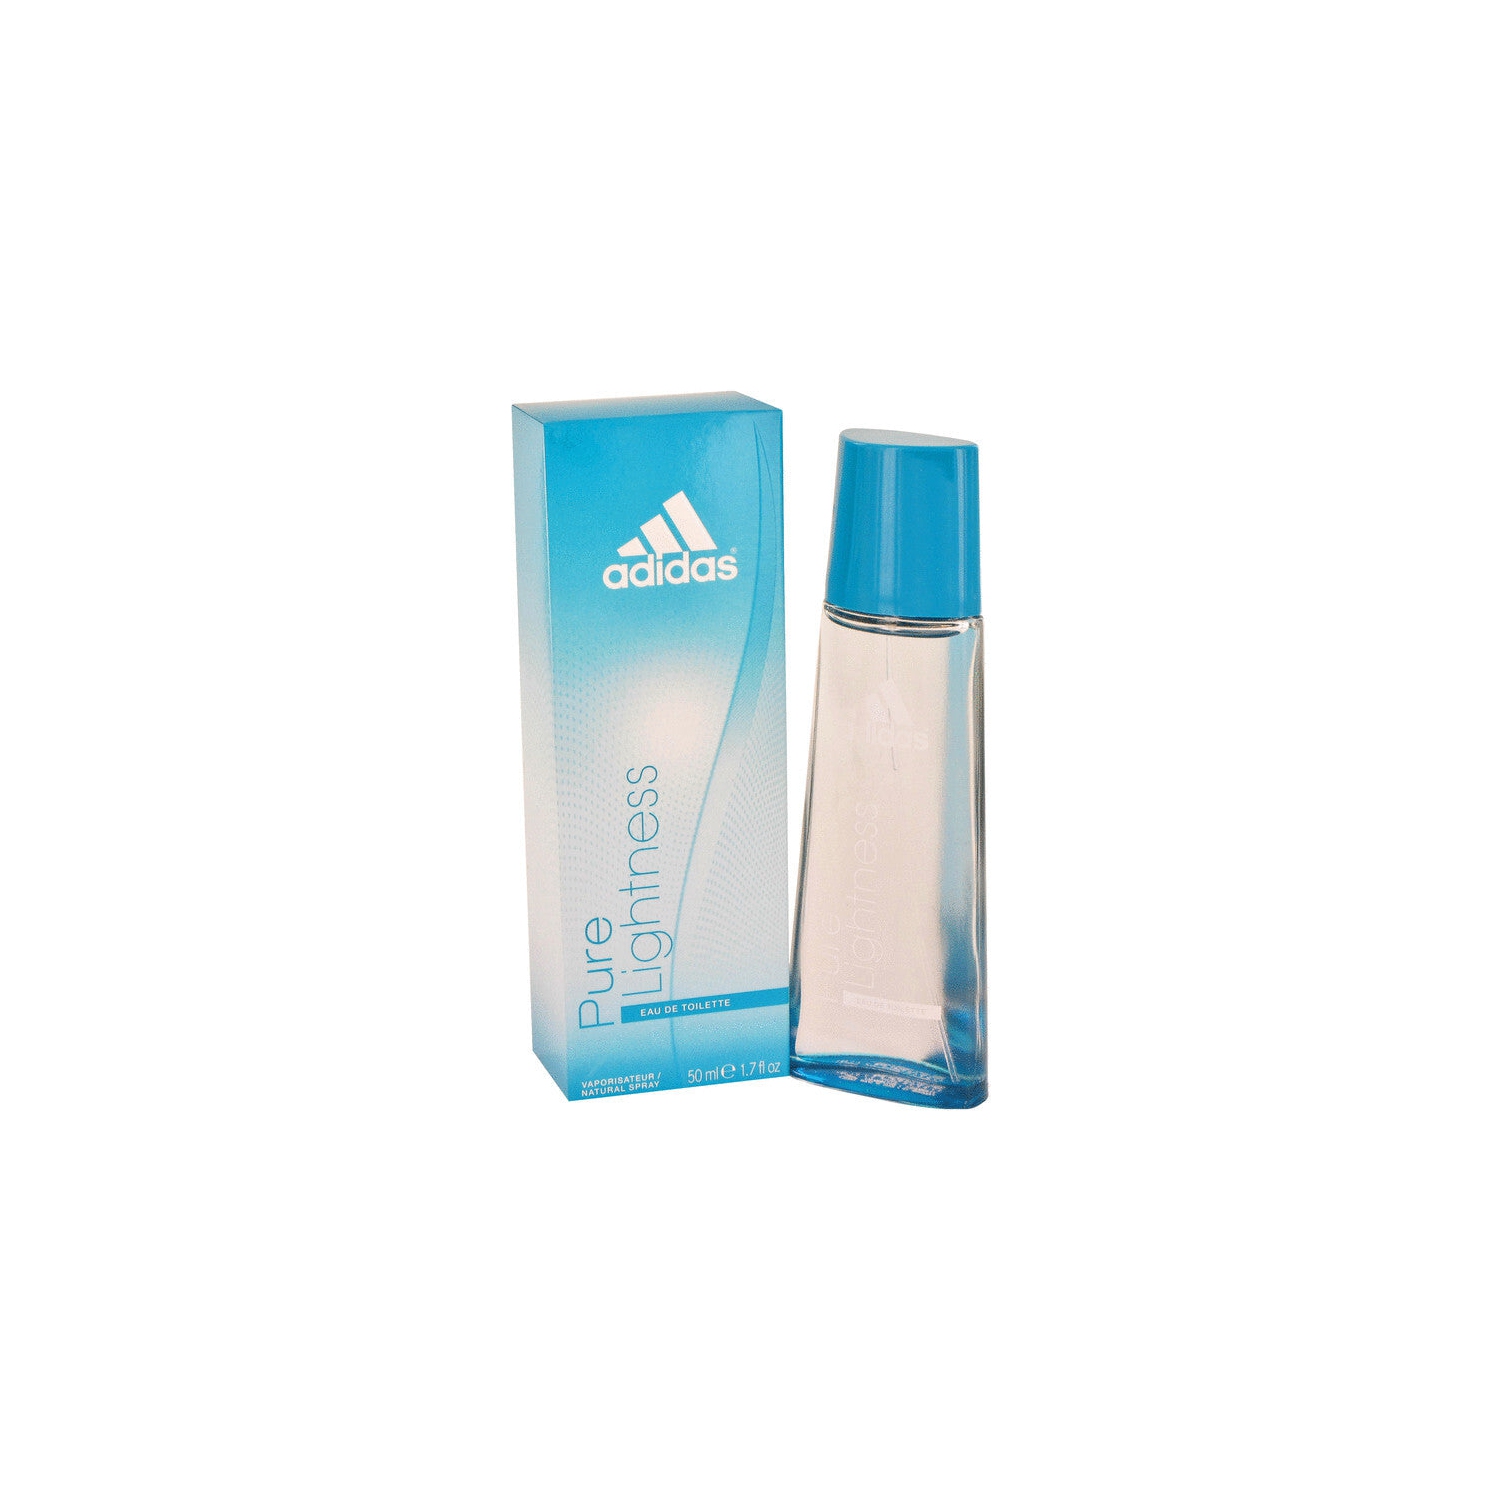 Adidas Pure Lightness by Adidas Eau De Toilette Spray (Women) 1.7 oz